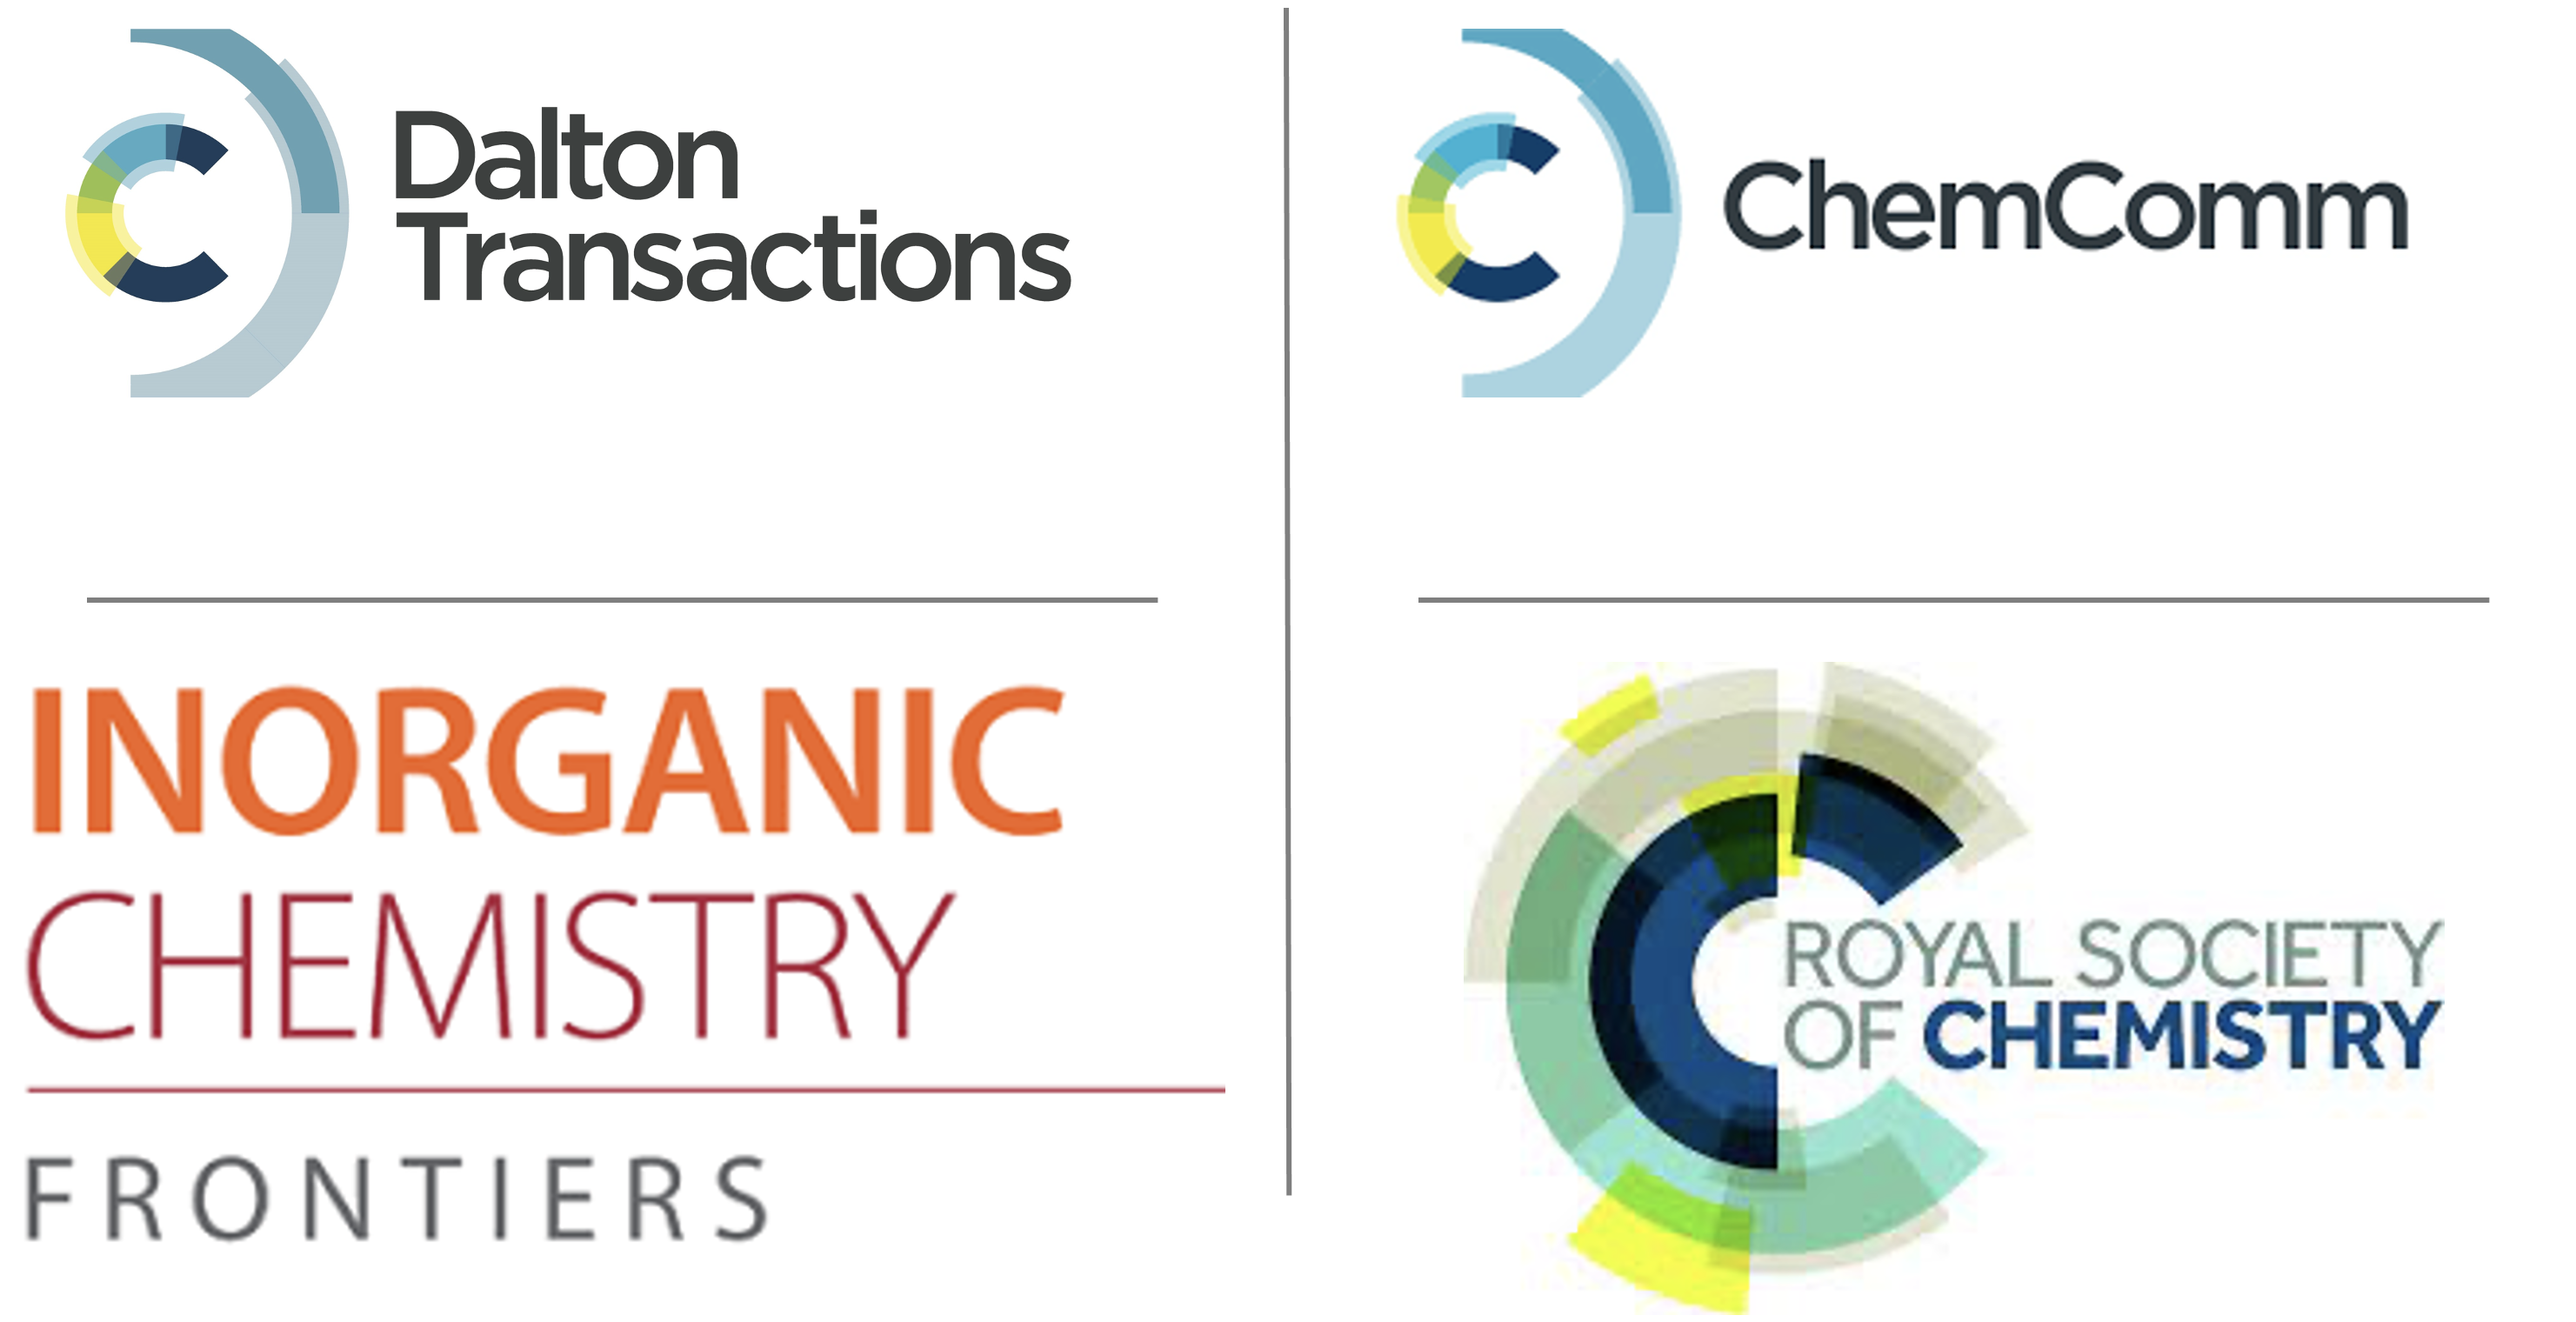 Royal Society of Chemistry: Dalton Transactions, Chem Comm, Inorganic Chemistry Frontiers